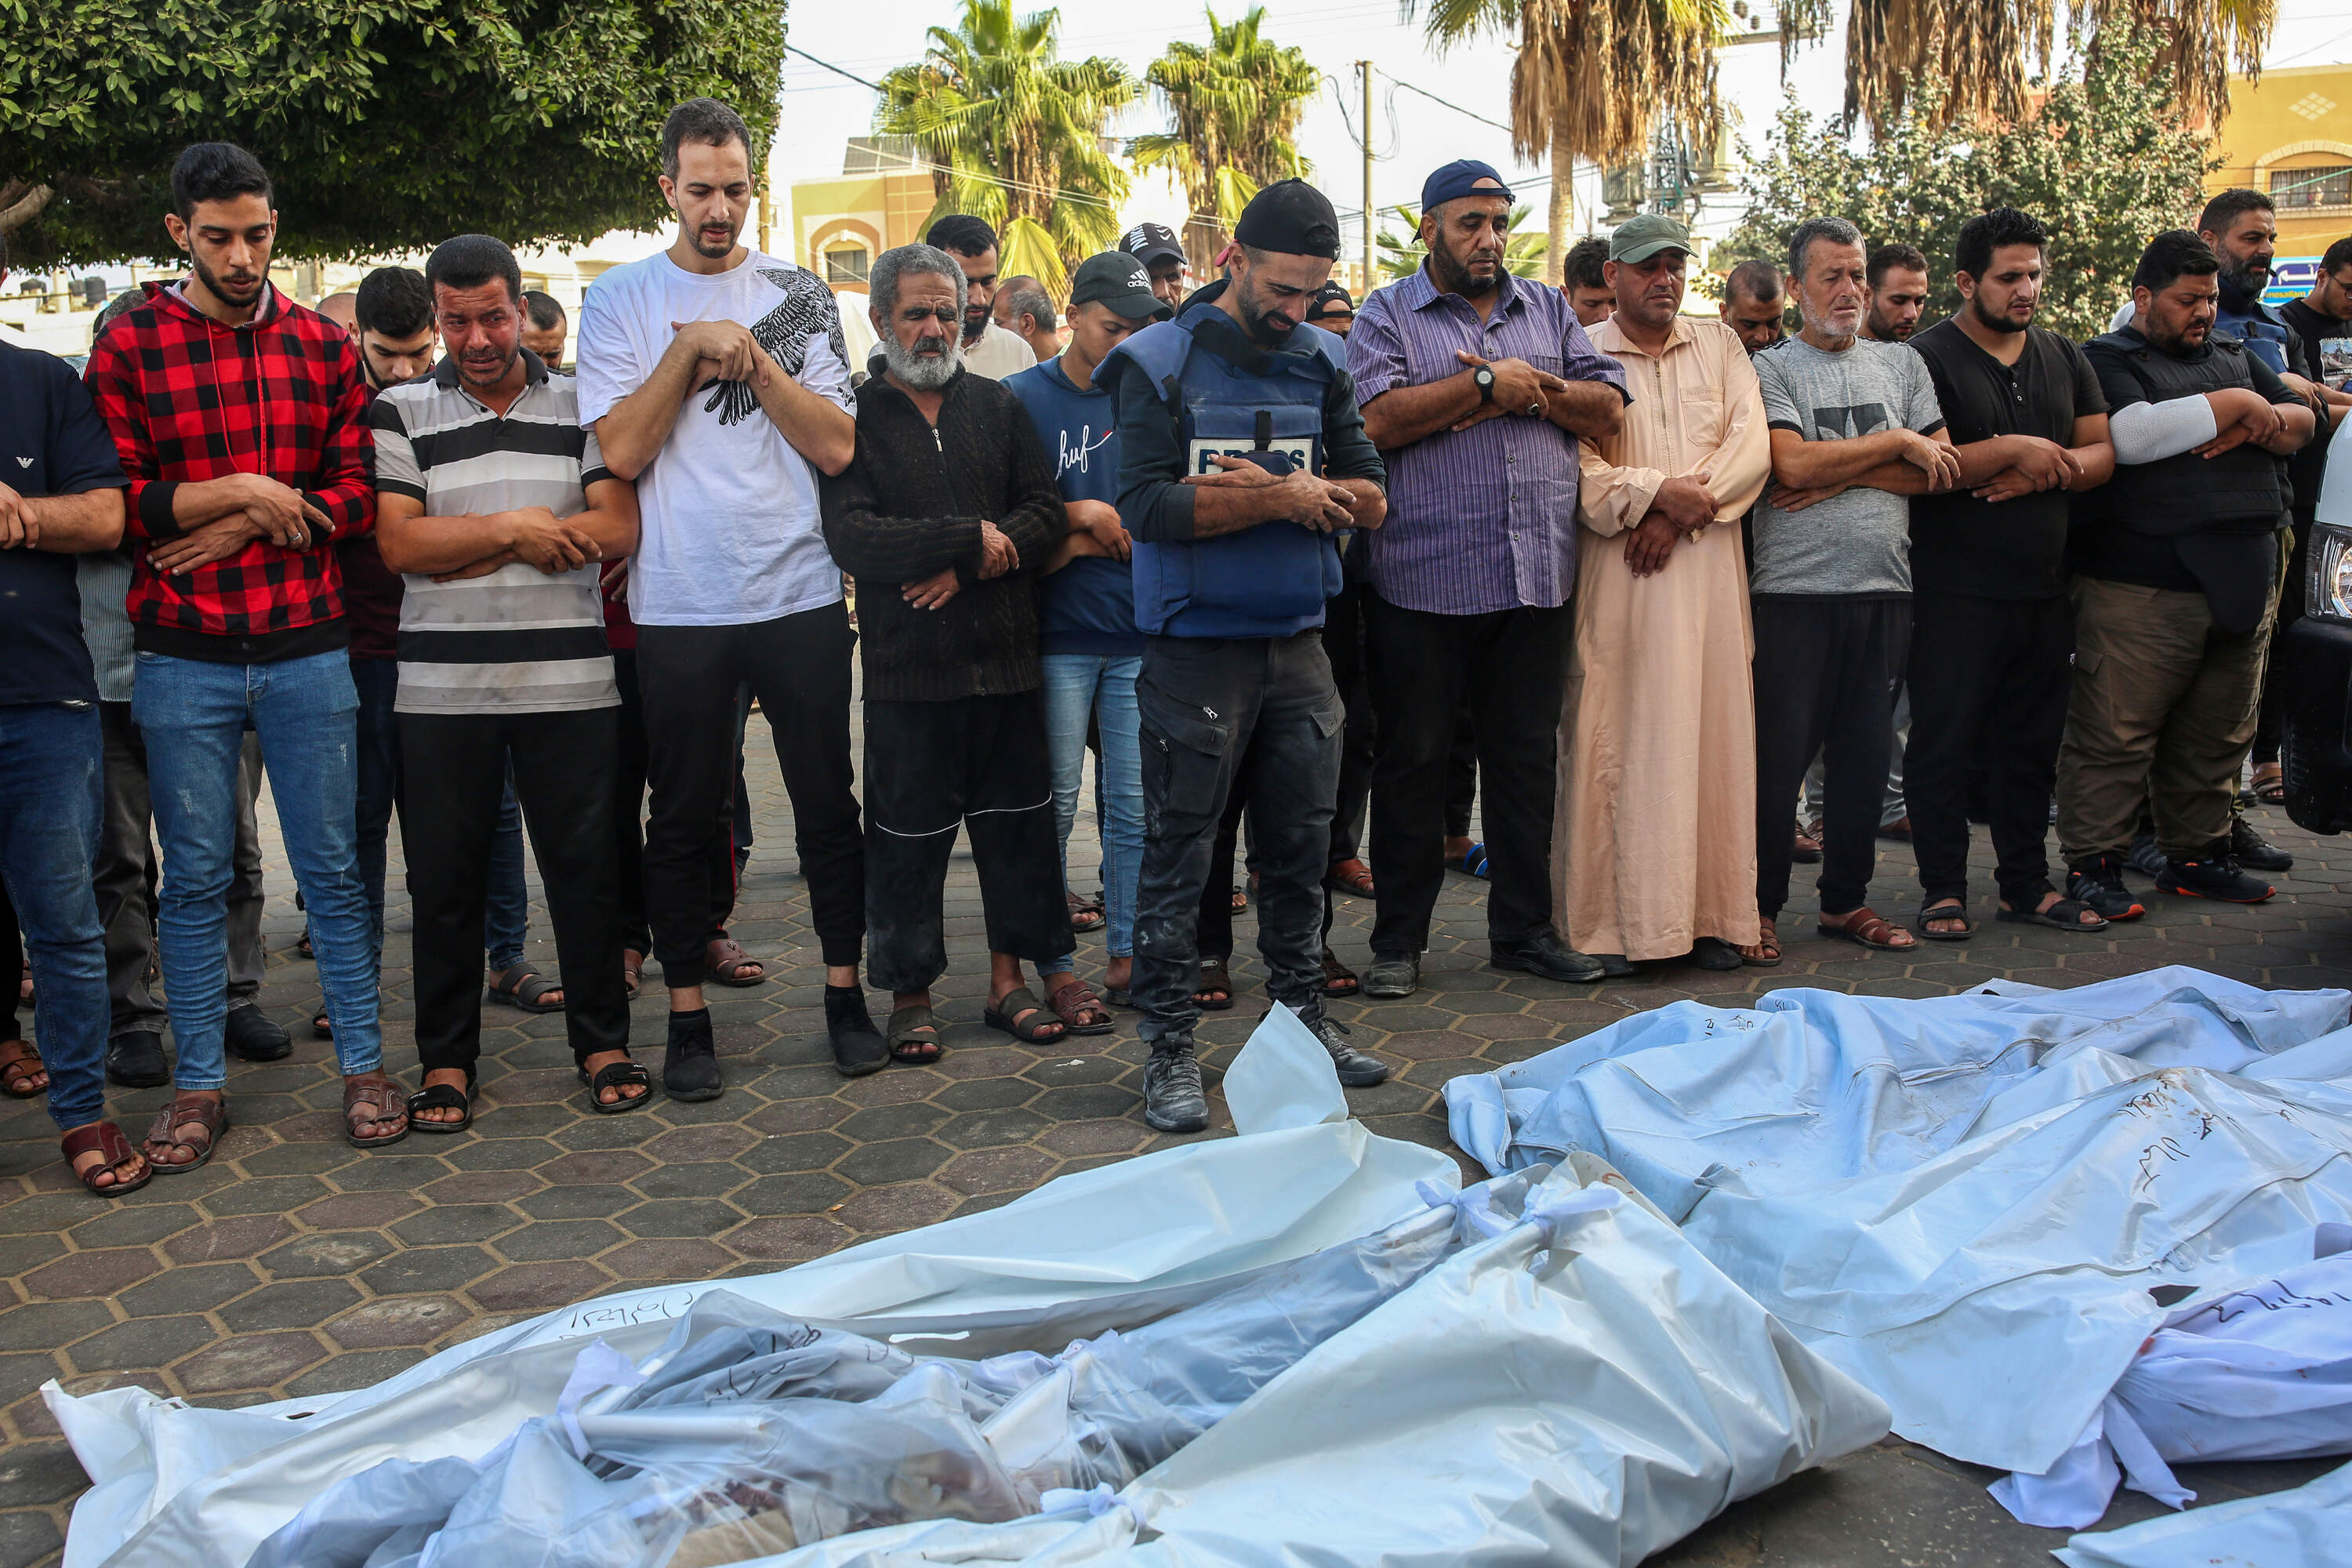 Gazans mourn. (Samar Abu Elouf/New York Times)